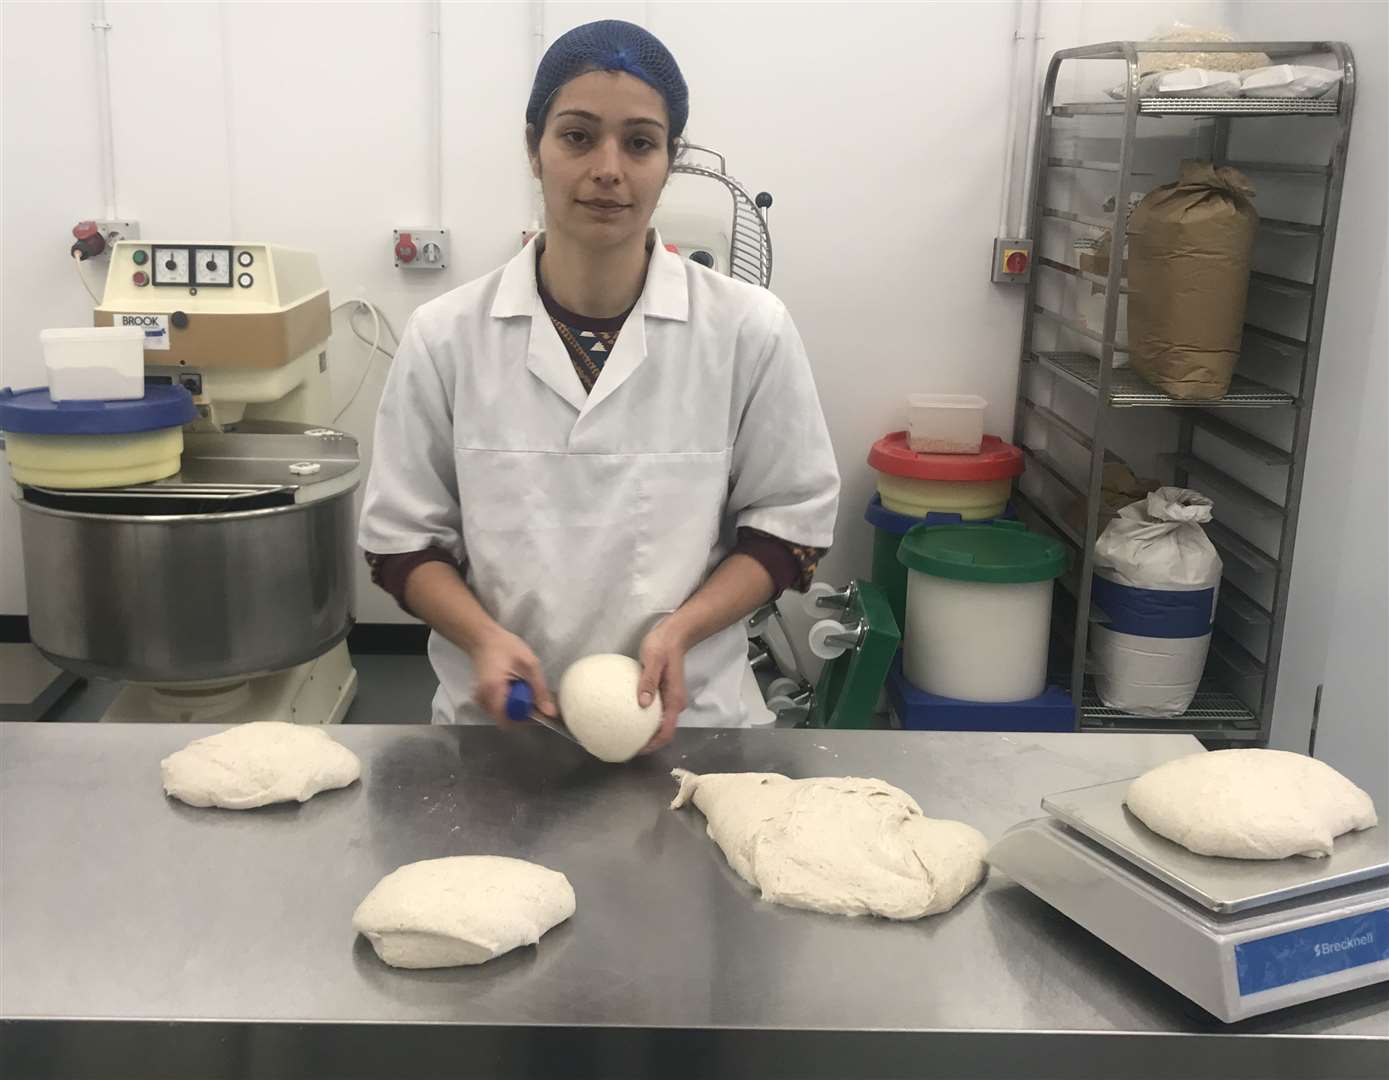 Tabitha prepares dough